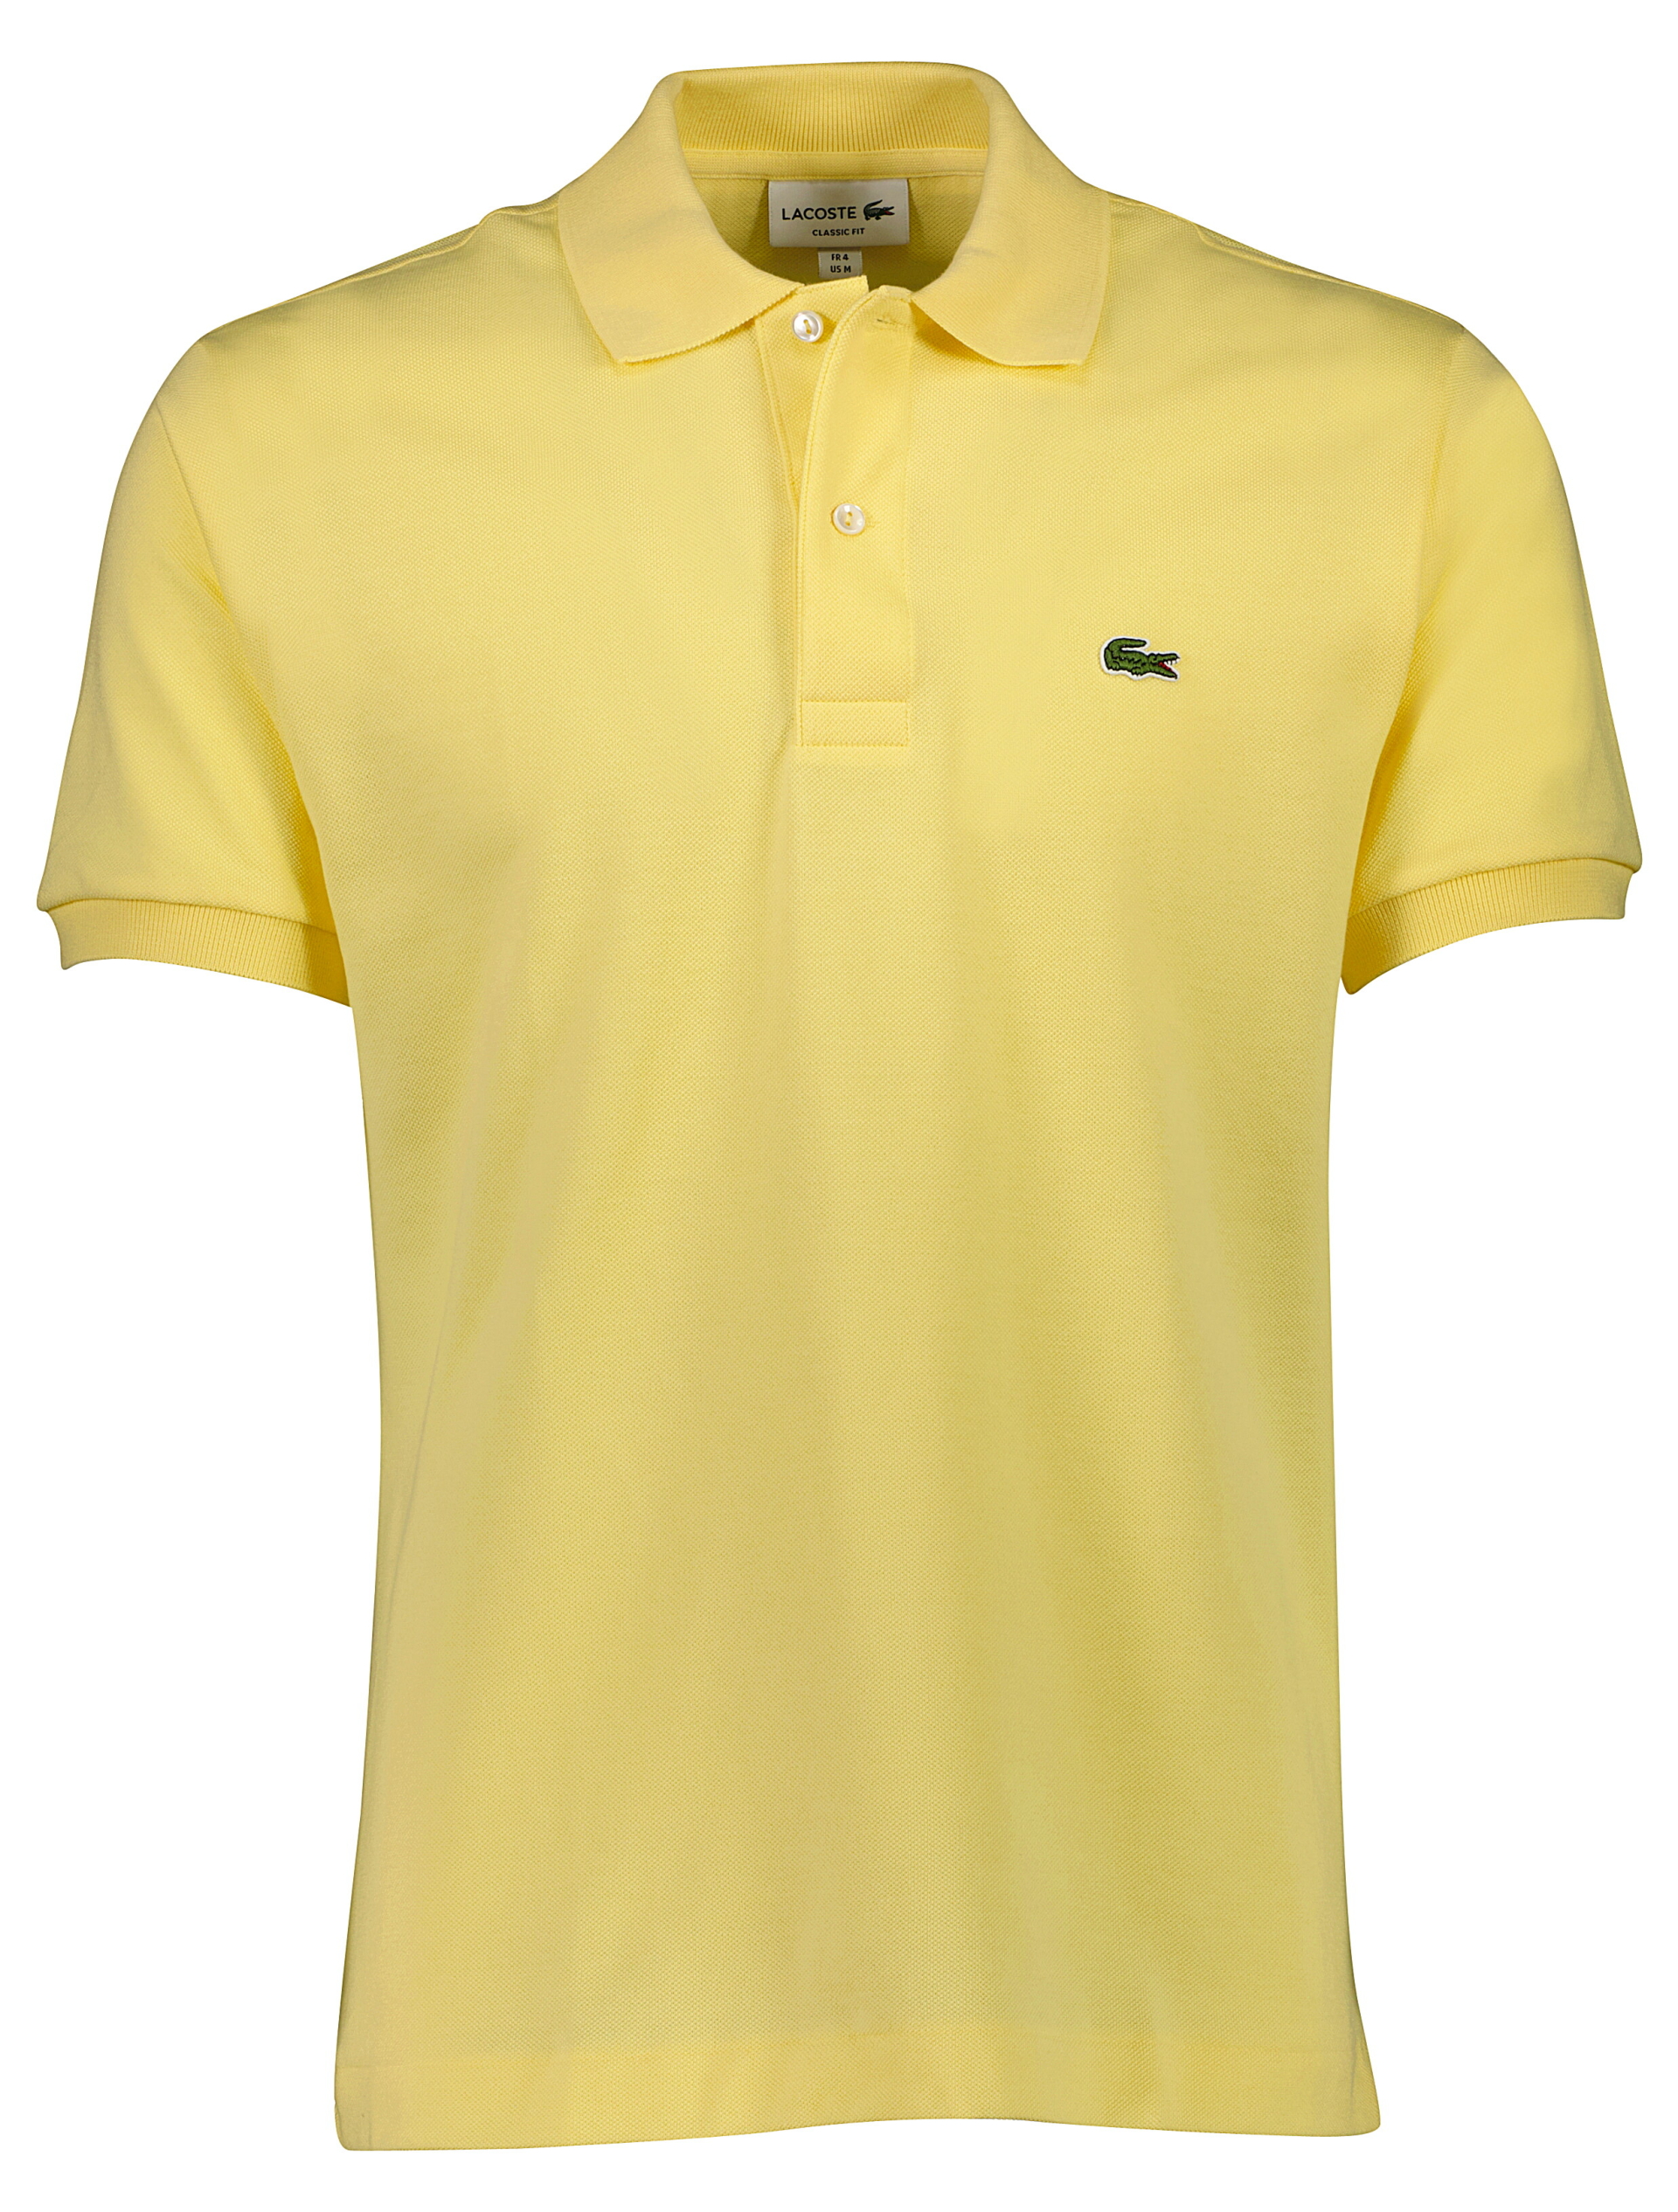 Lacoste Poloshirt gul / 6xp yellow